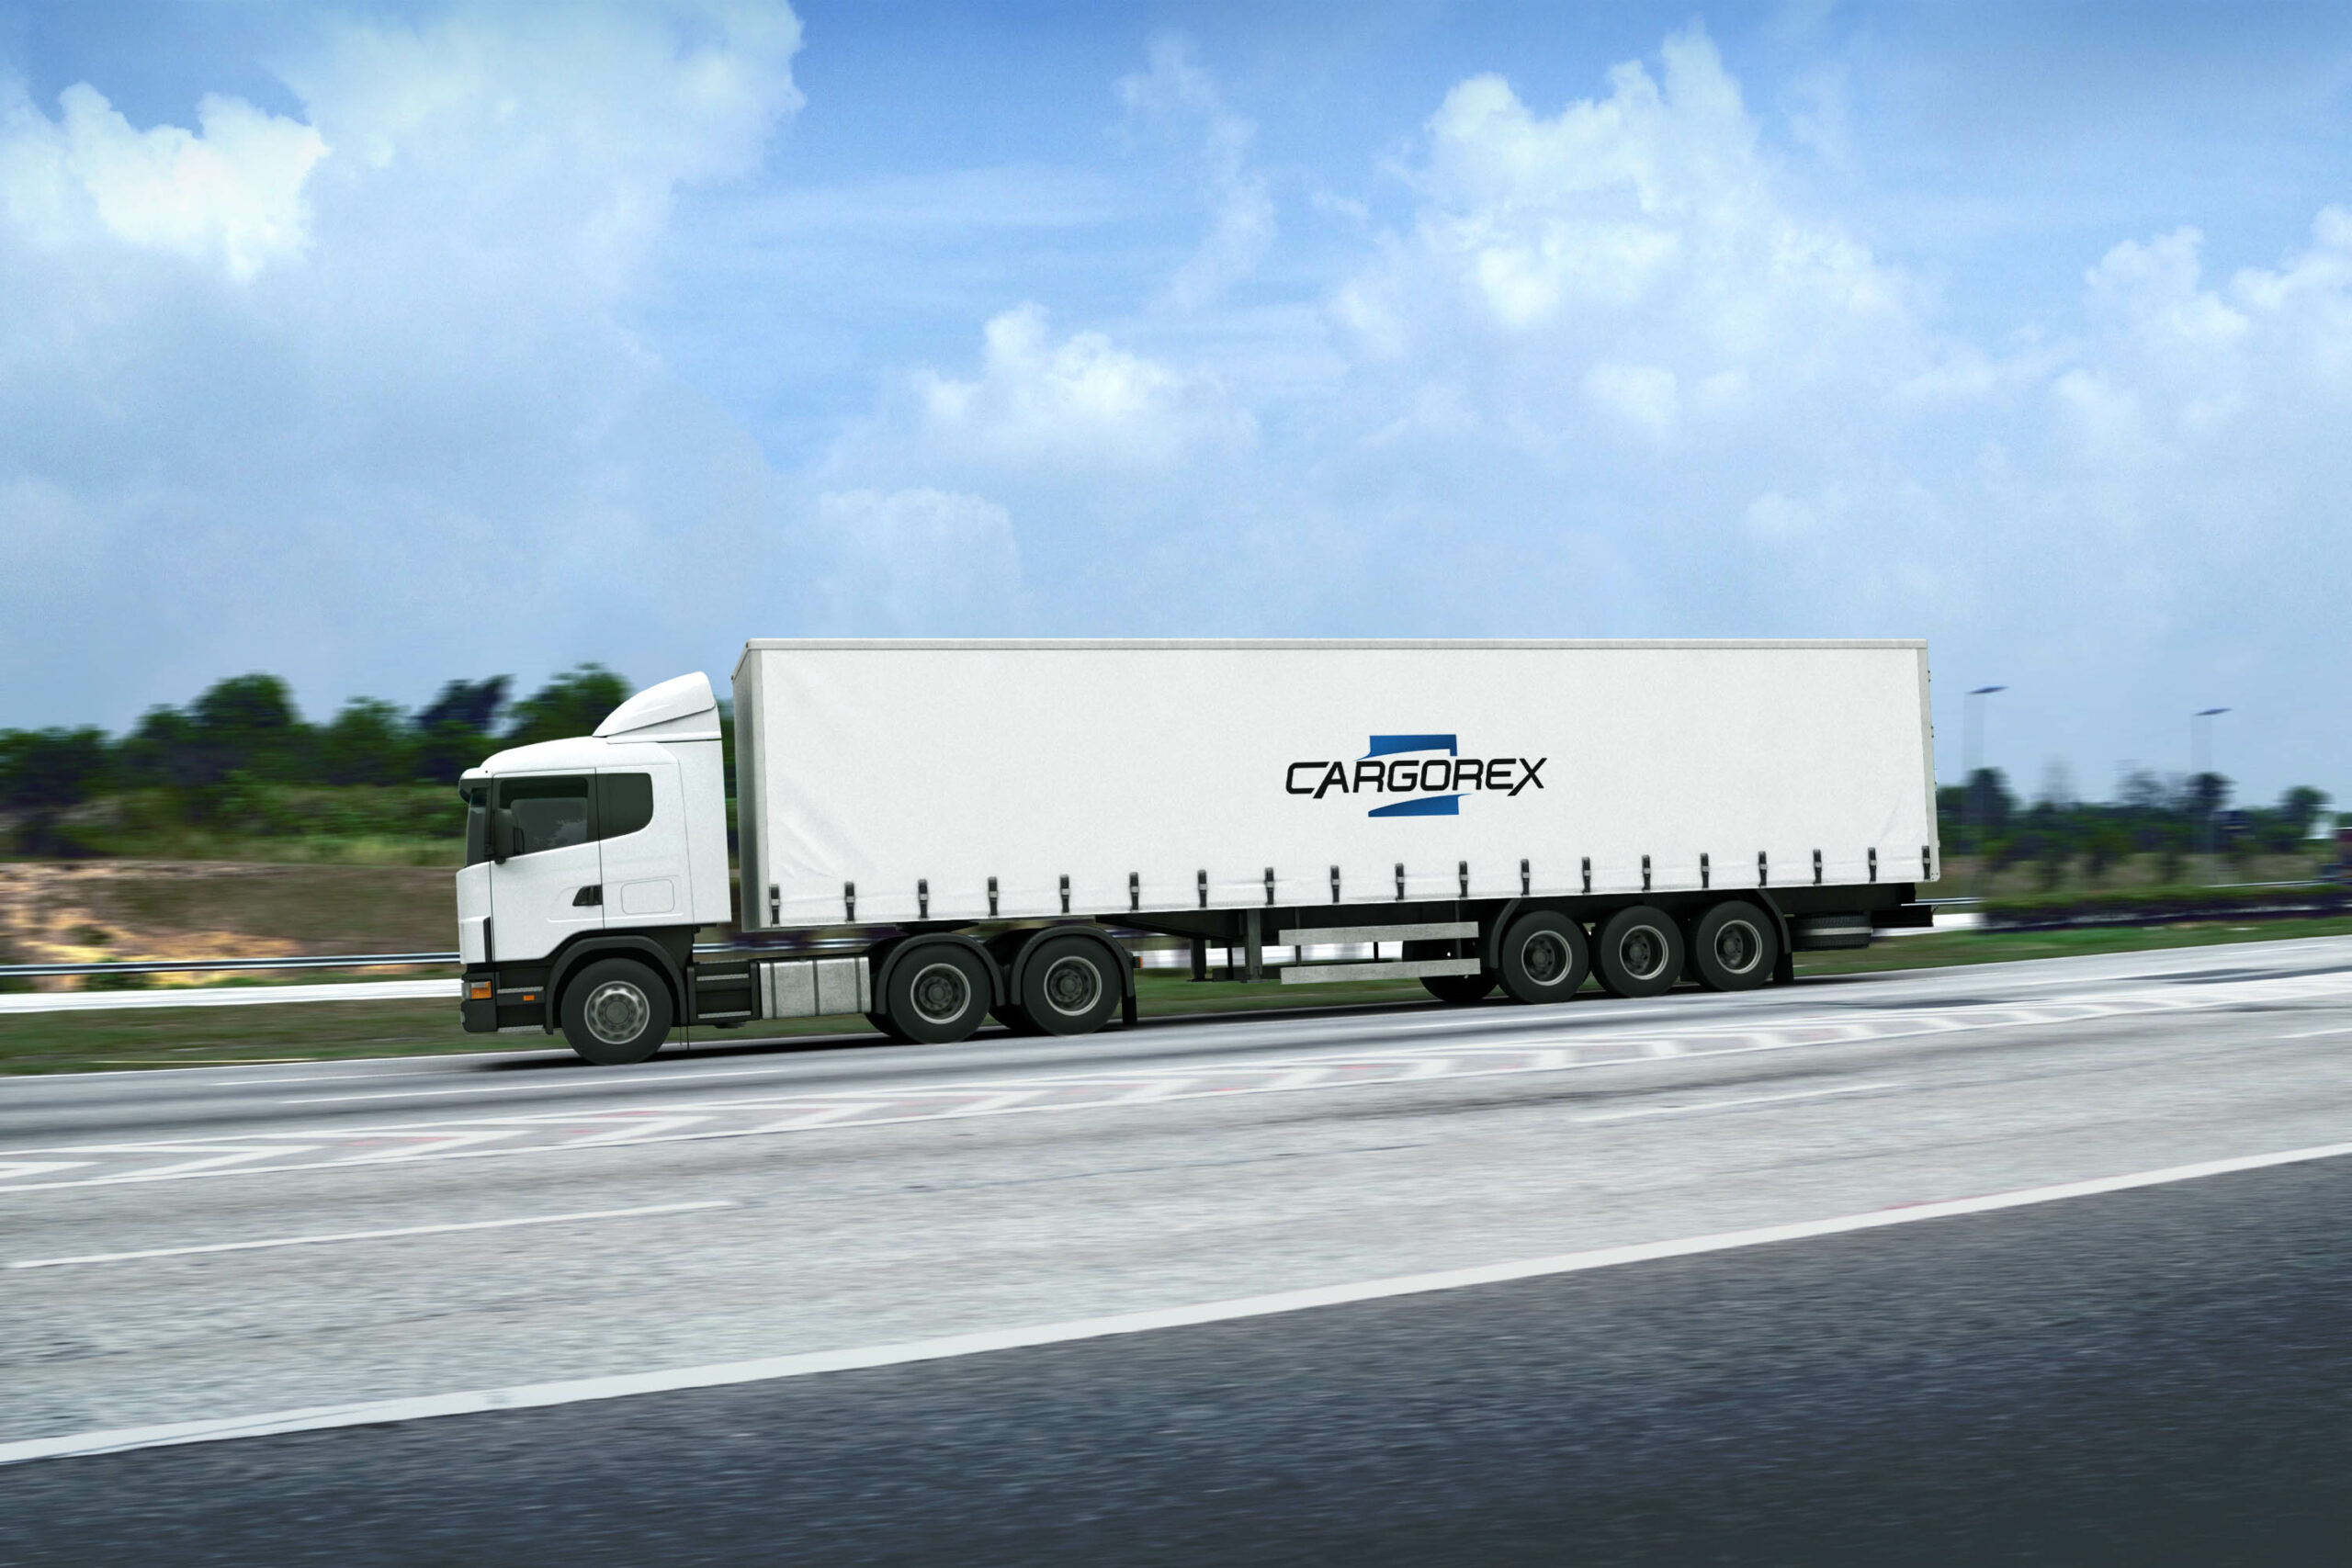 cargorex mockup 5 skaliert - Suffolk Freight Services